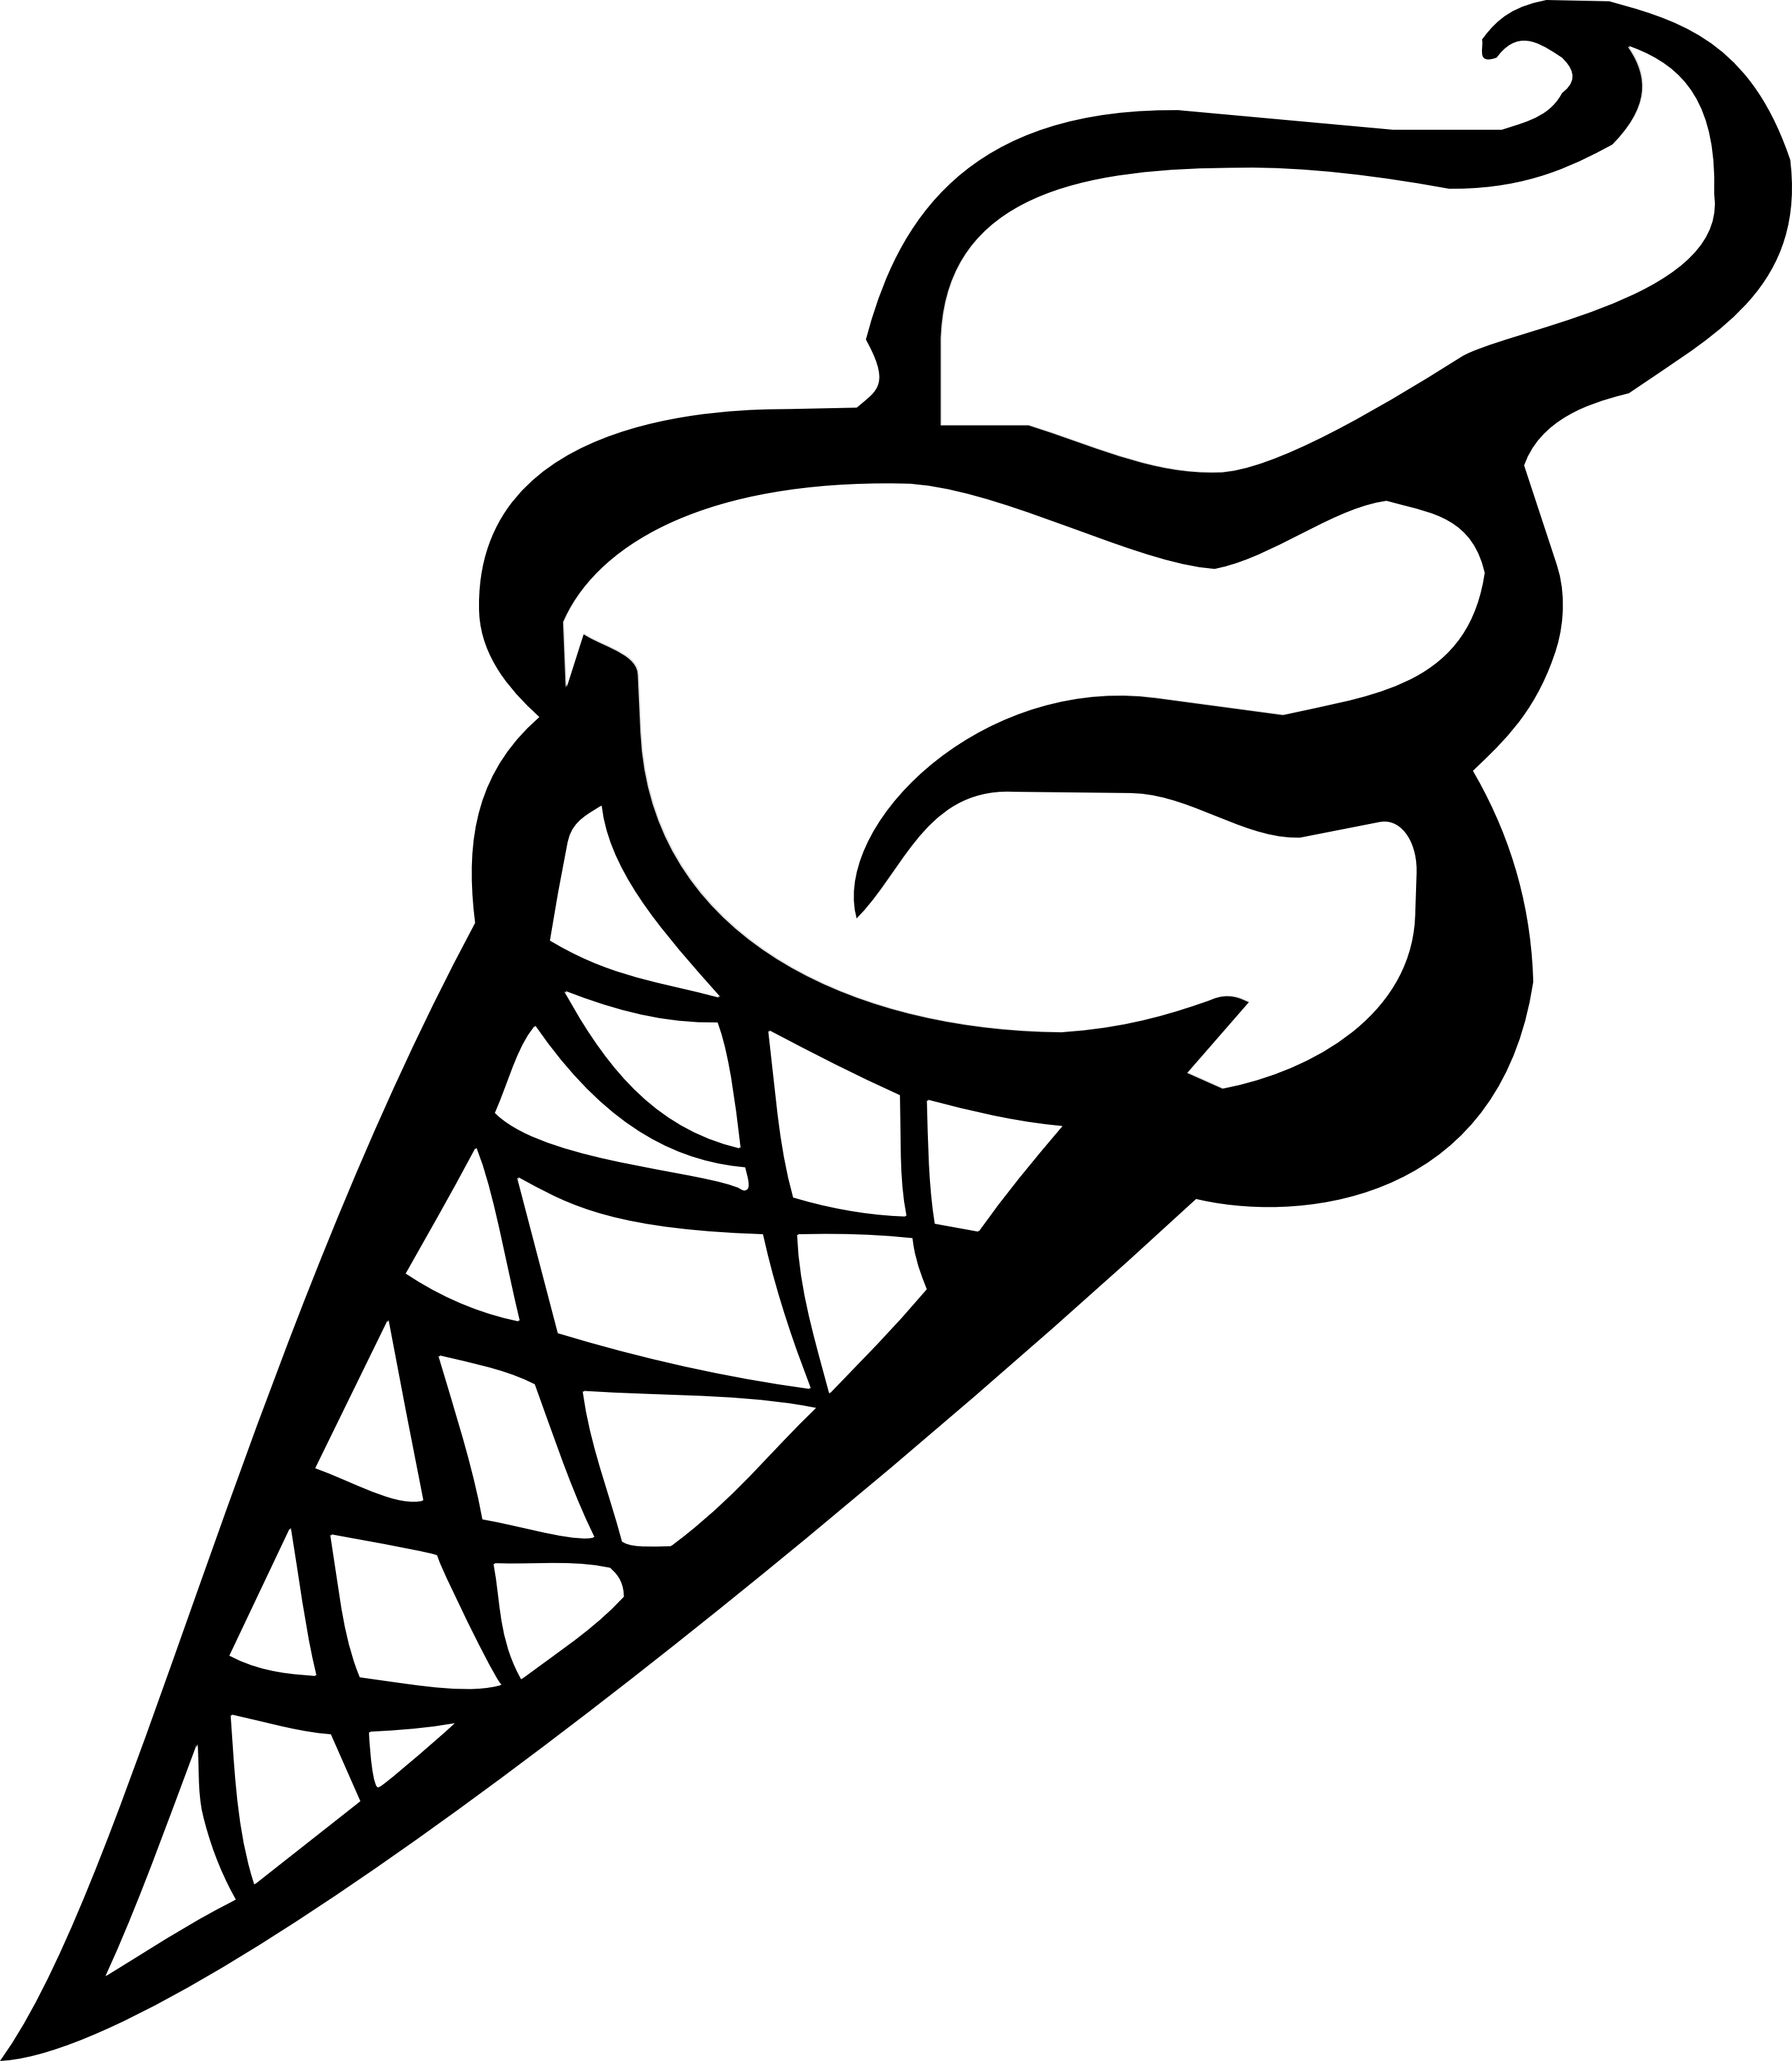 ice cream sundae clipart black and white - photo #19